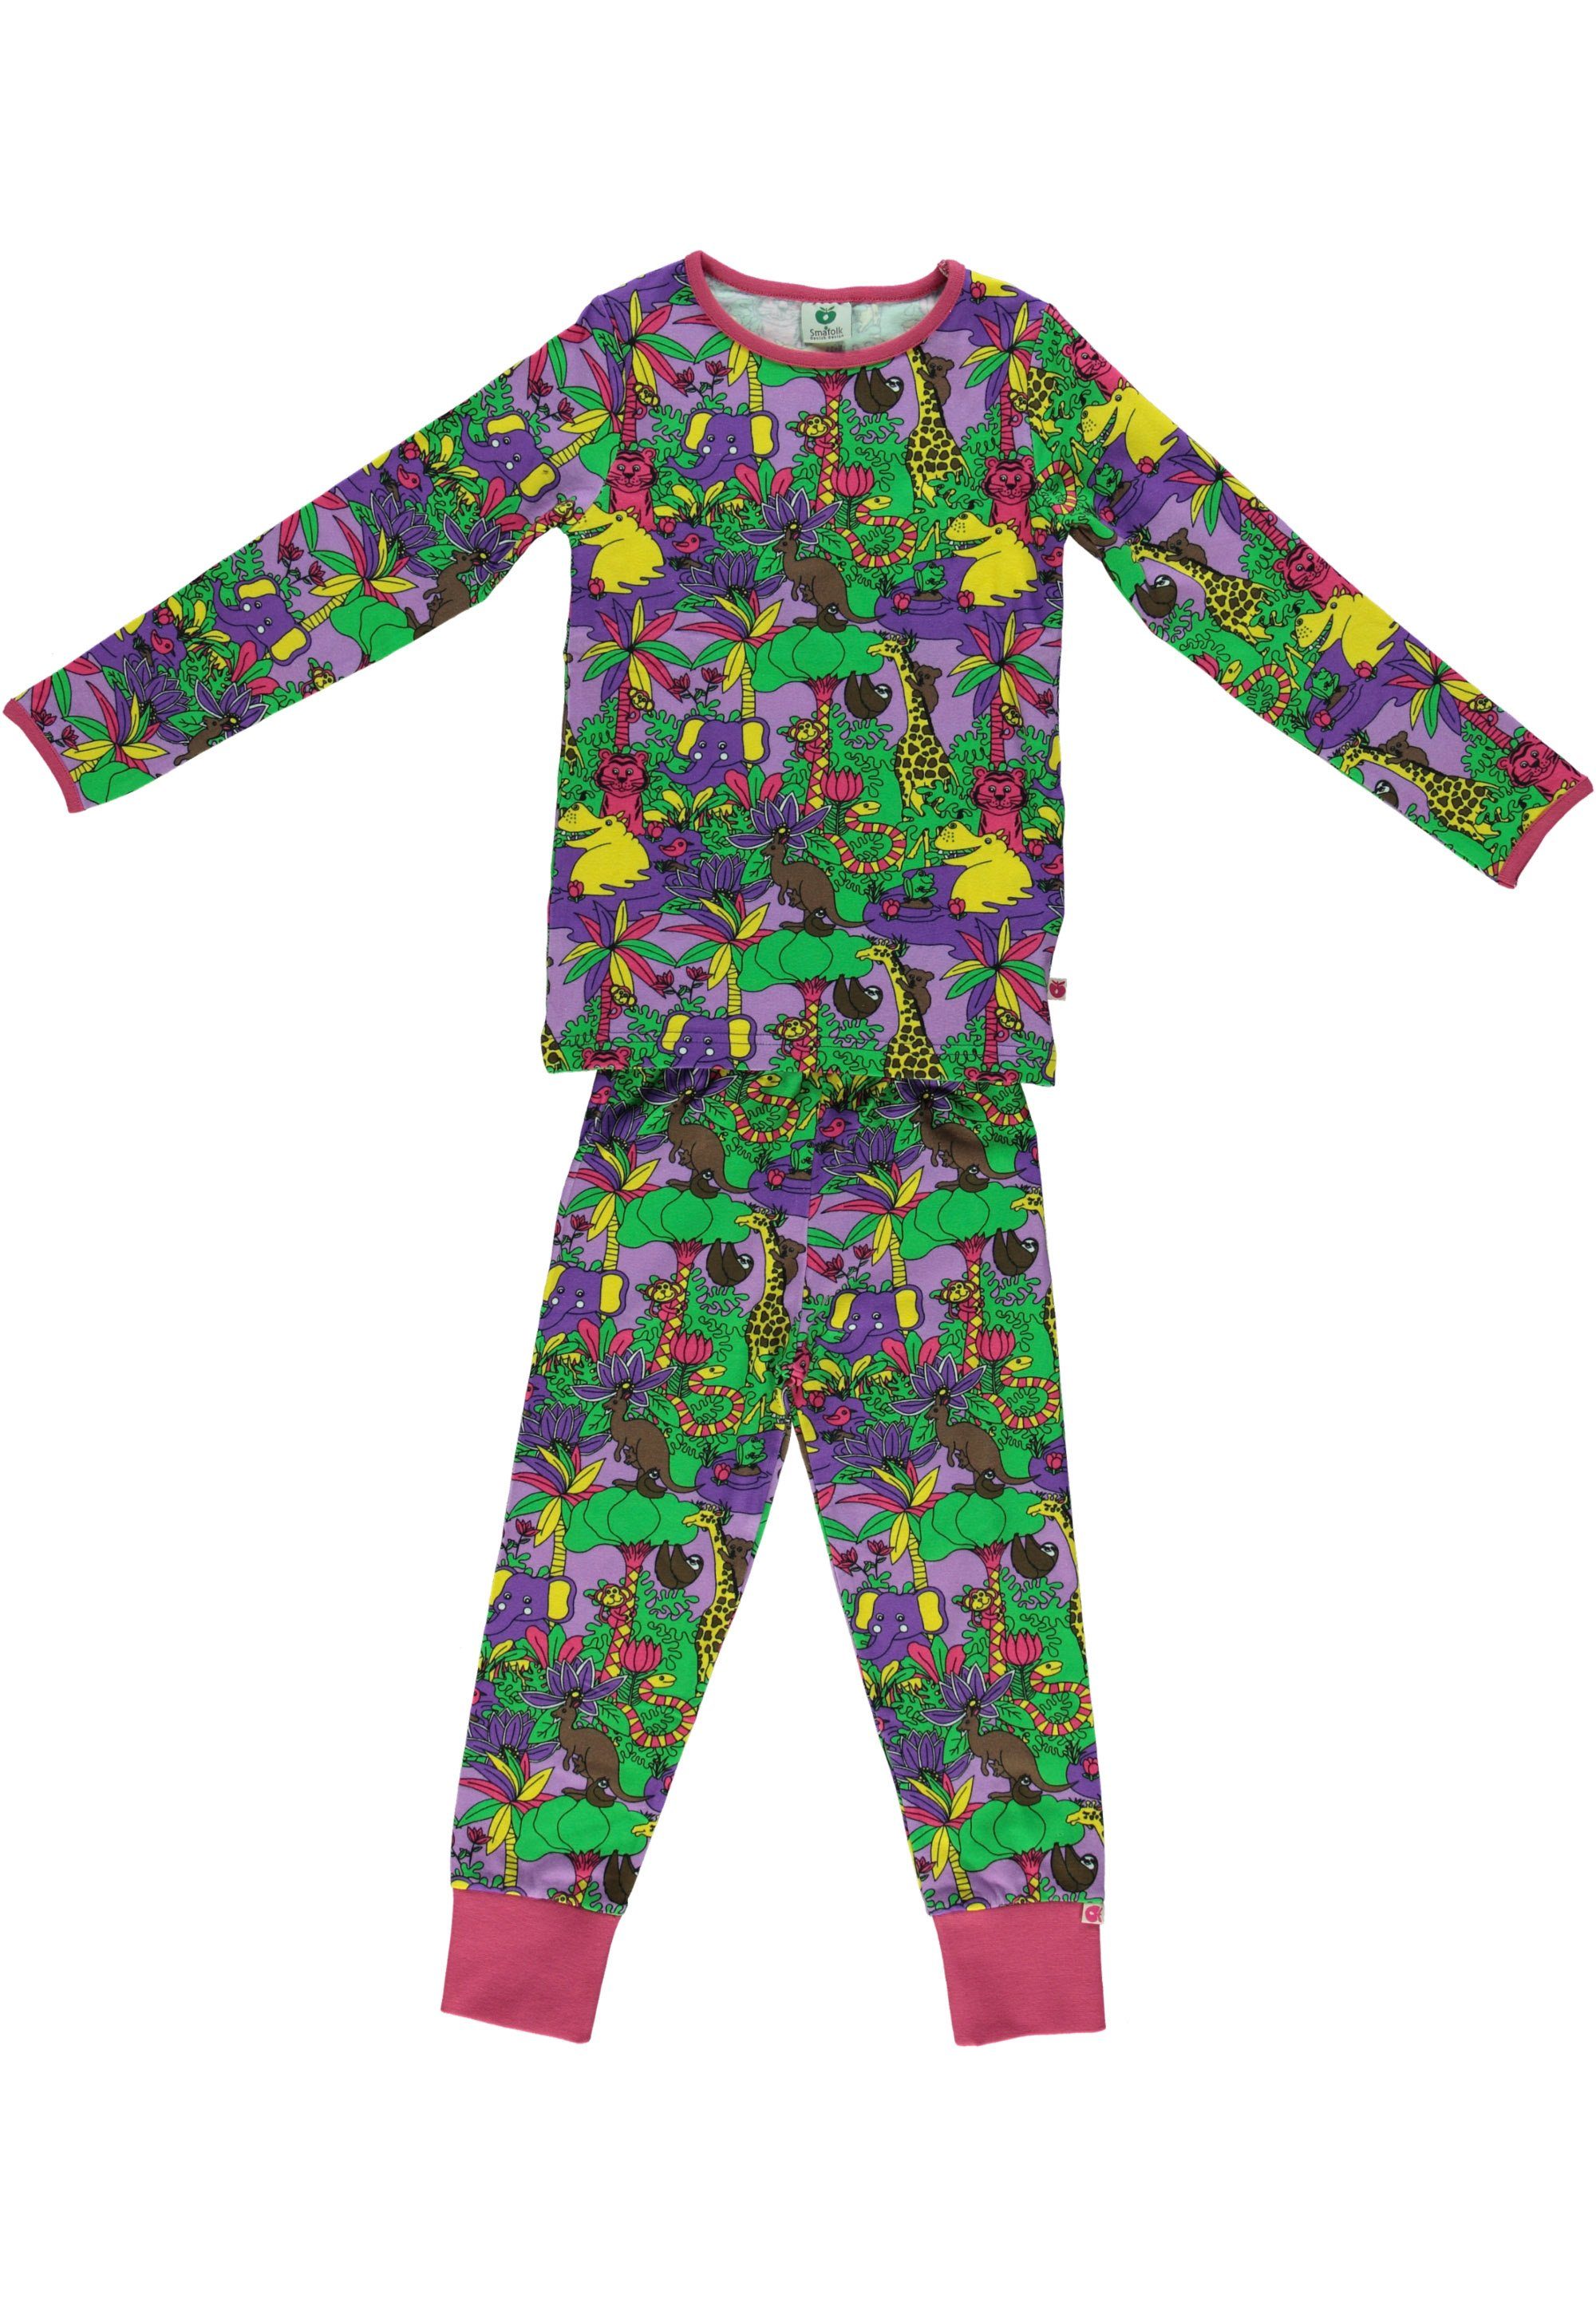 Småfolk Pyjama Jungle nachhaltig, Baumwolle